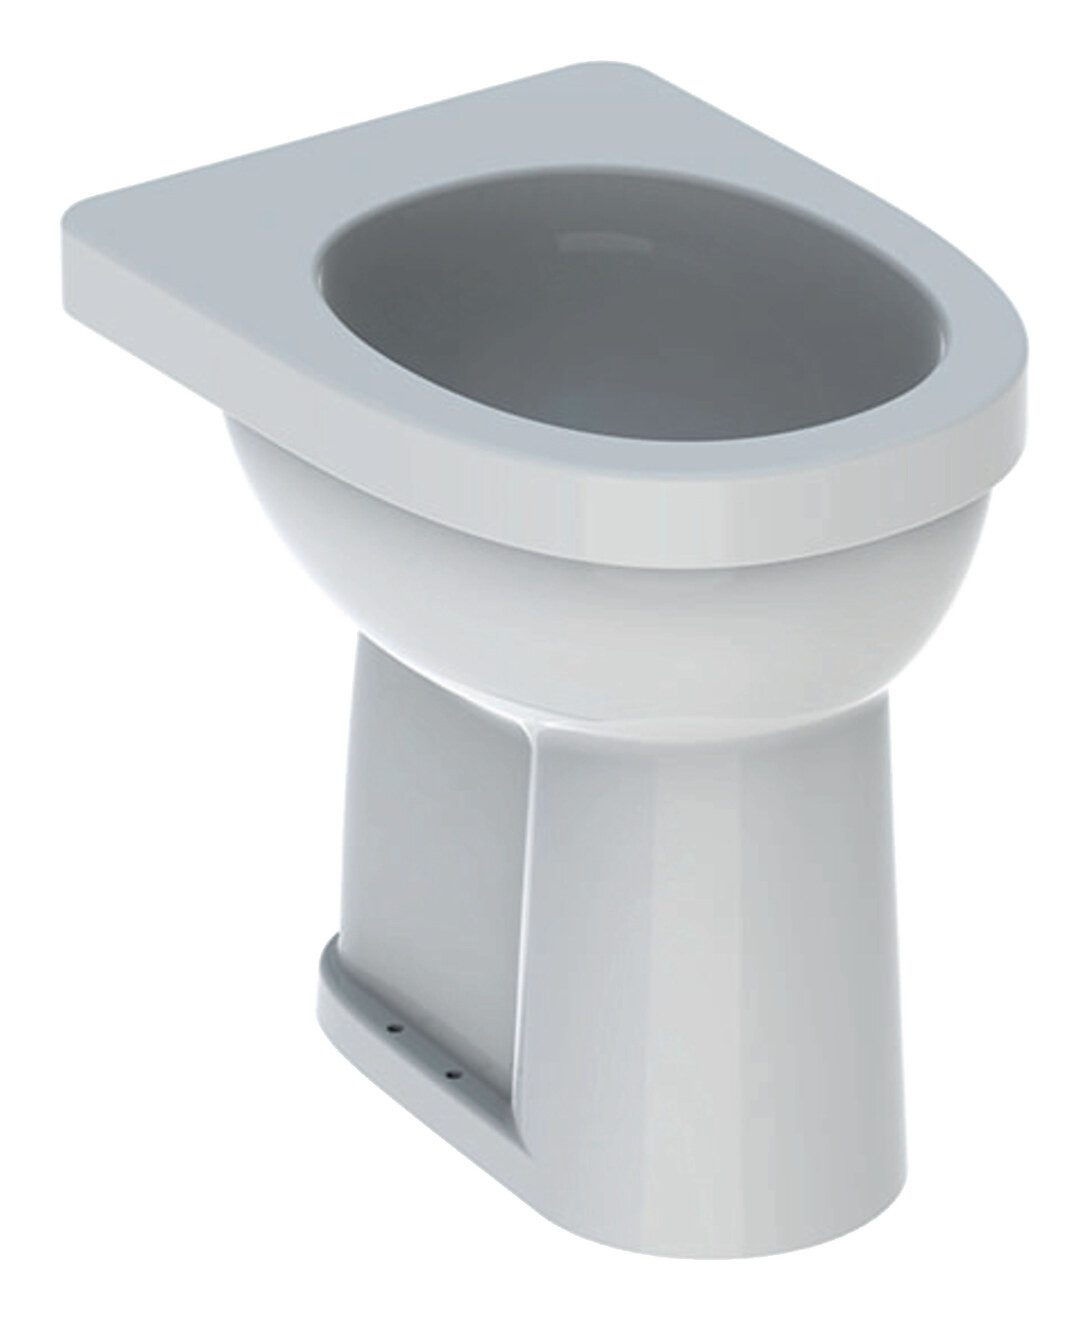 GEBERIT Flachspül-WC Renova Comfort, Stehend, Stand Abgang vertikal Höhe 450 mm - Weiß